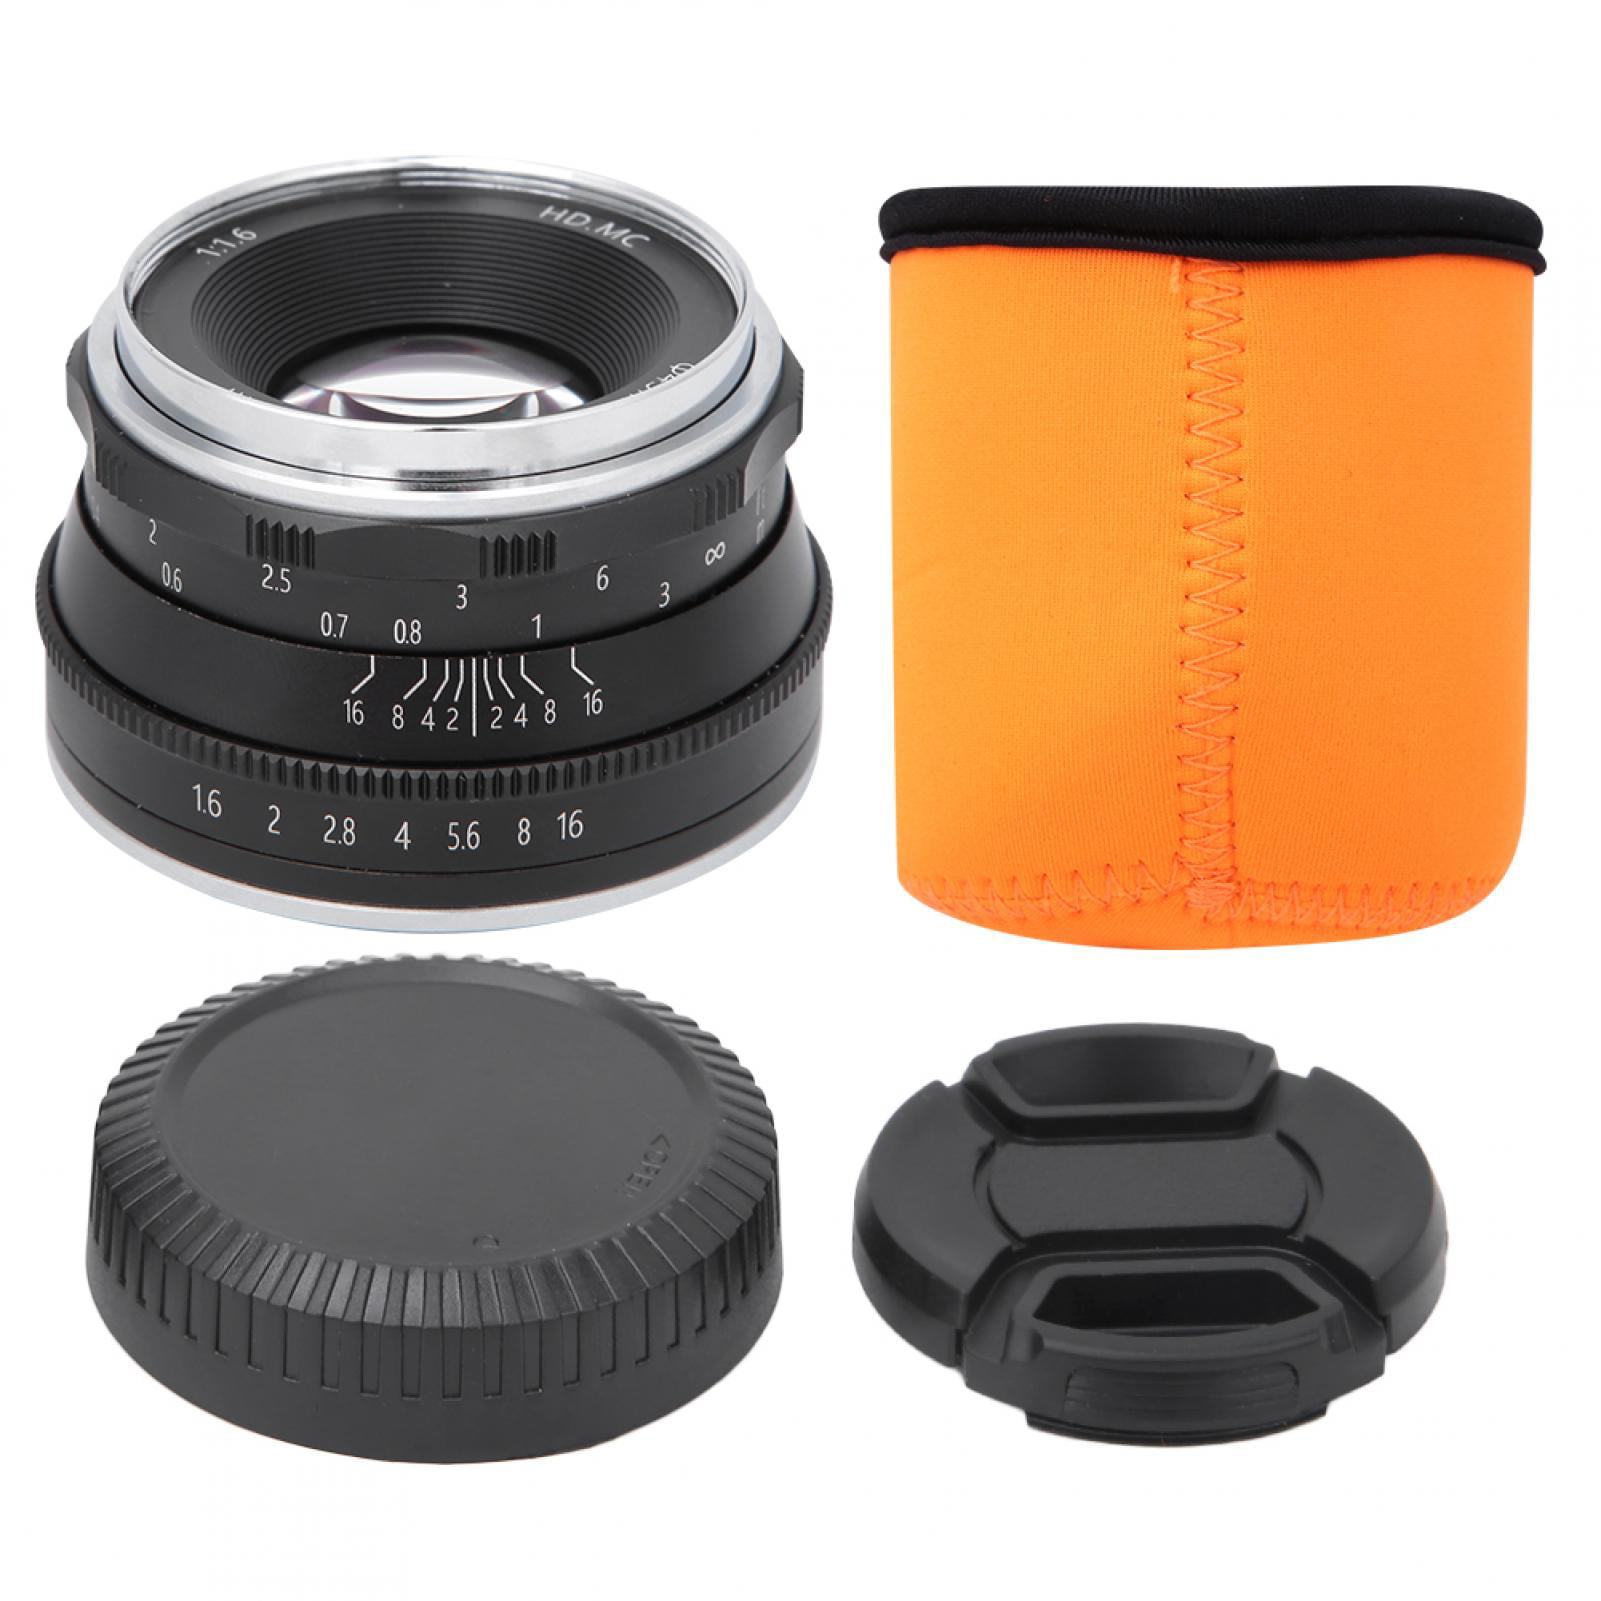 Mirrorless Camera Lens for Fujifilm XT3 XT100 XT20,35mm F1.6 Manual Focusing Multilayer Film Coating Camera FX Mount Lens with Storage Bag Silver